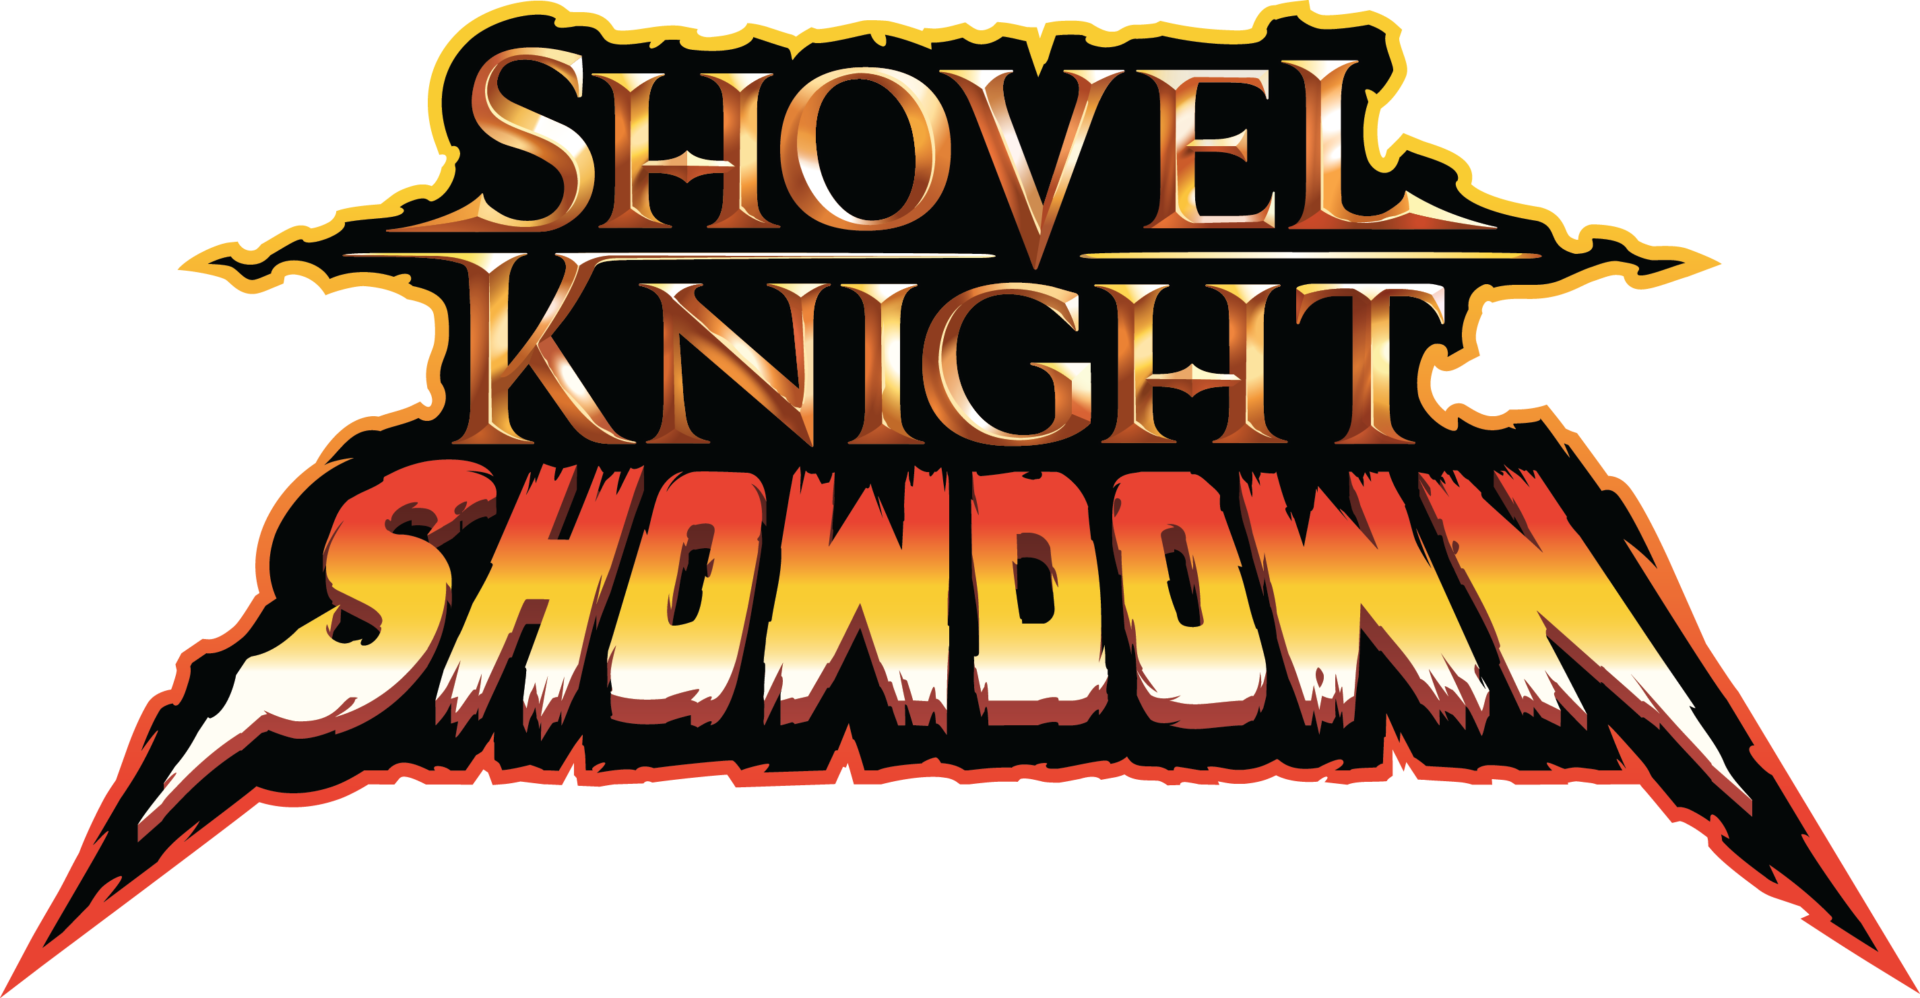 Yacht Club Games เปิดตัวเกมต่อสู้ Shovel Knight Showdown